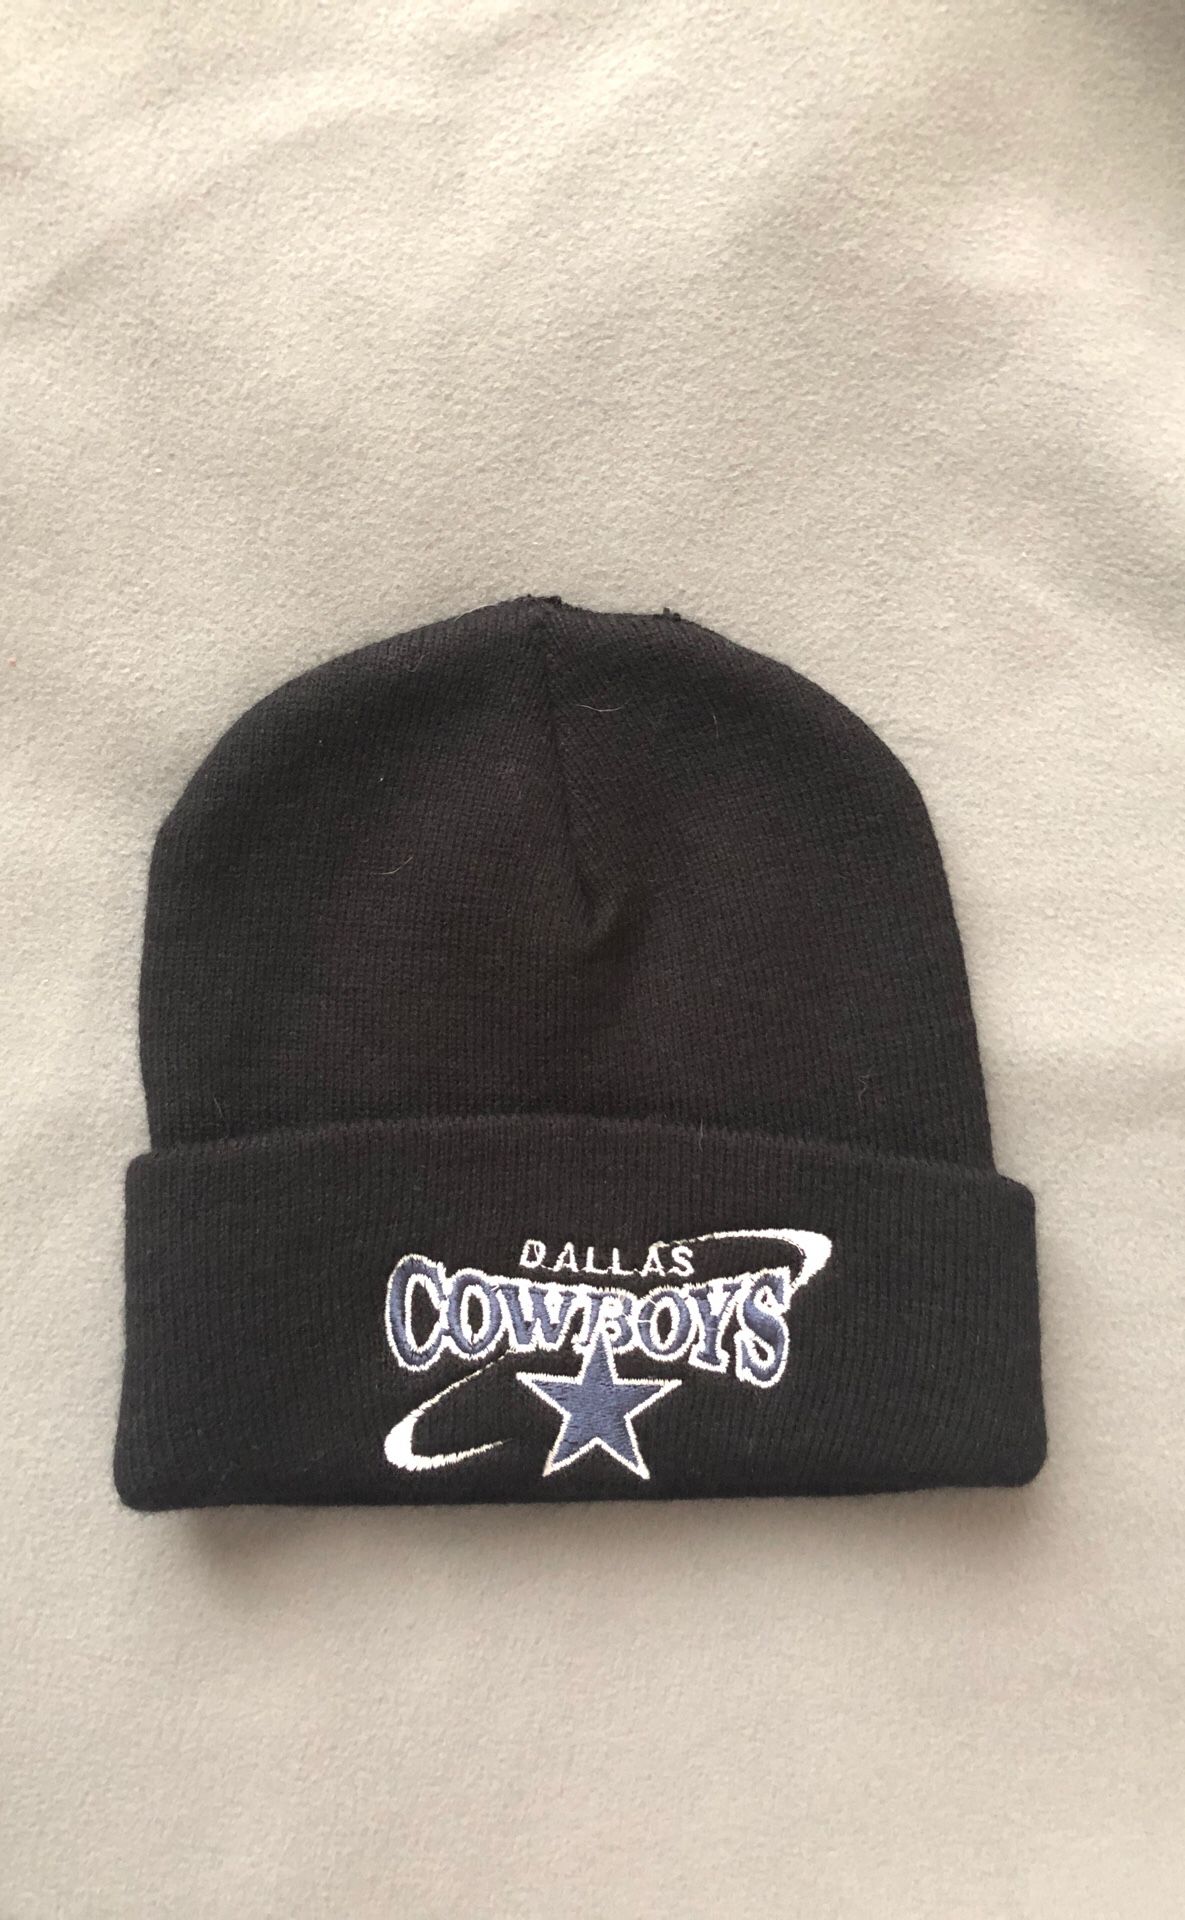 Dallas Cowboys stocking cap